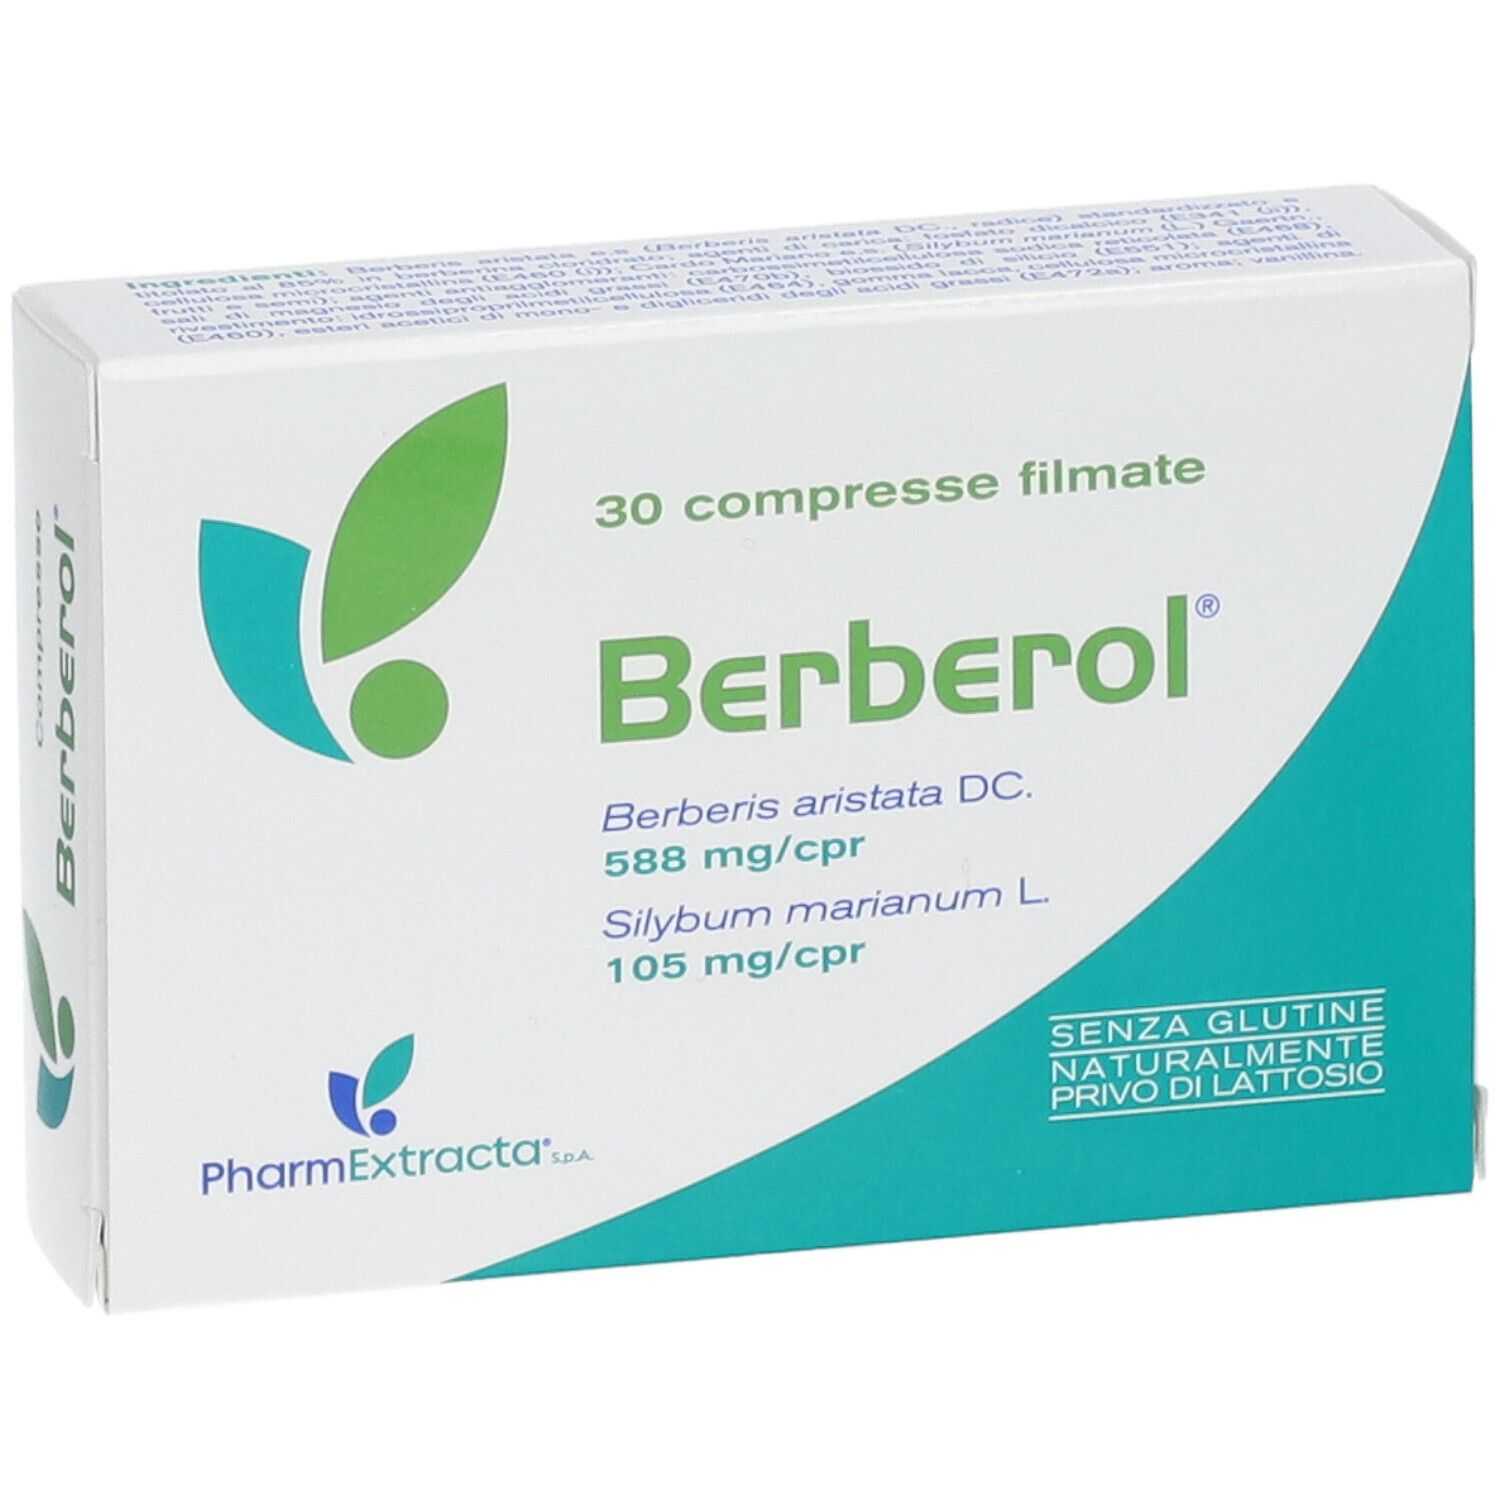 Berberol® Compresse